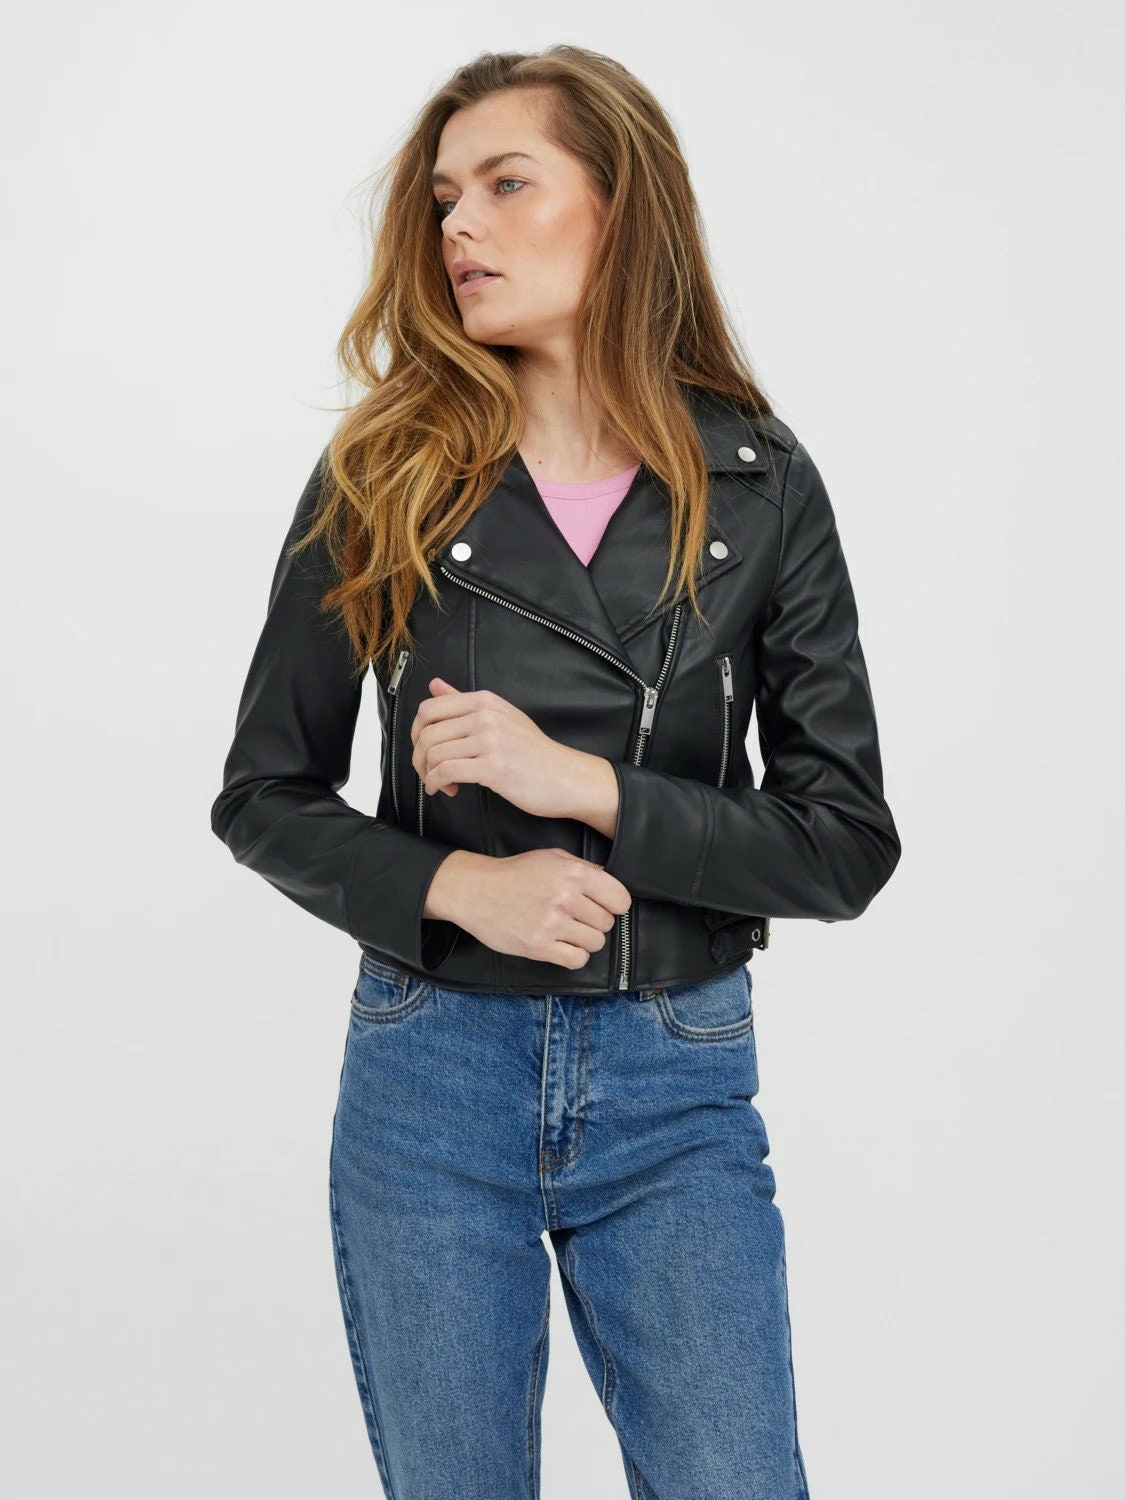 Women's Black Leather Jacket With Gunmetal Zipper 